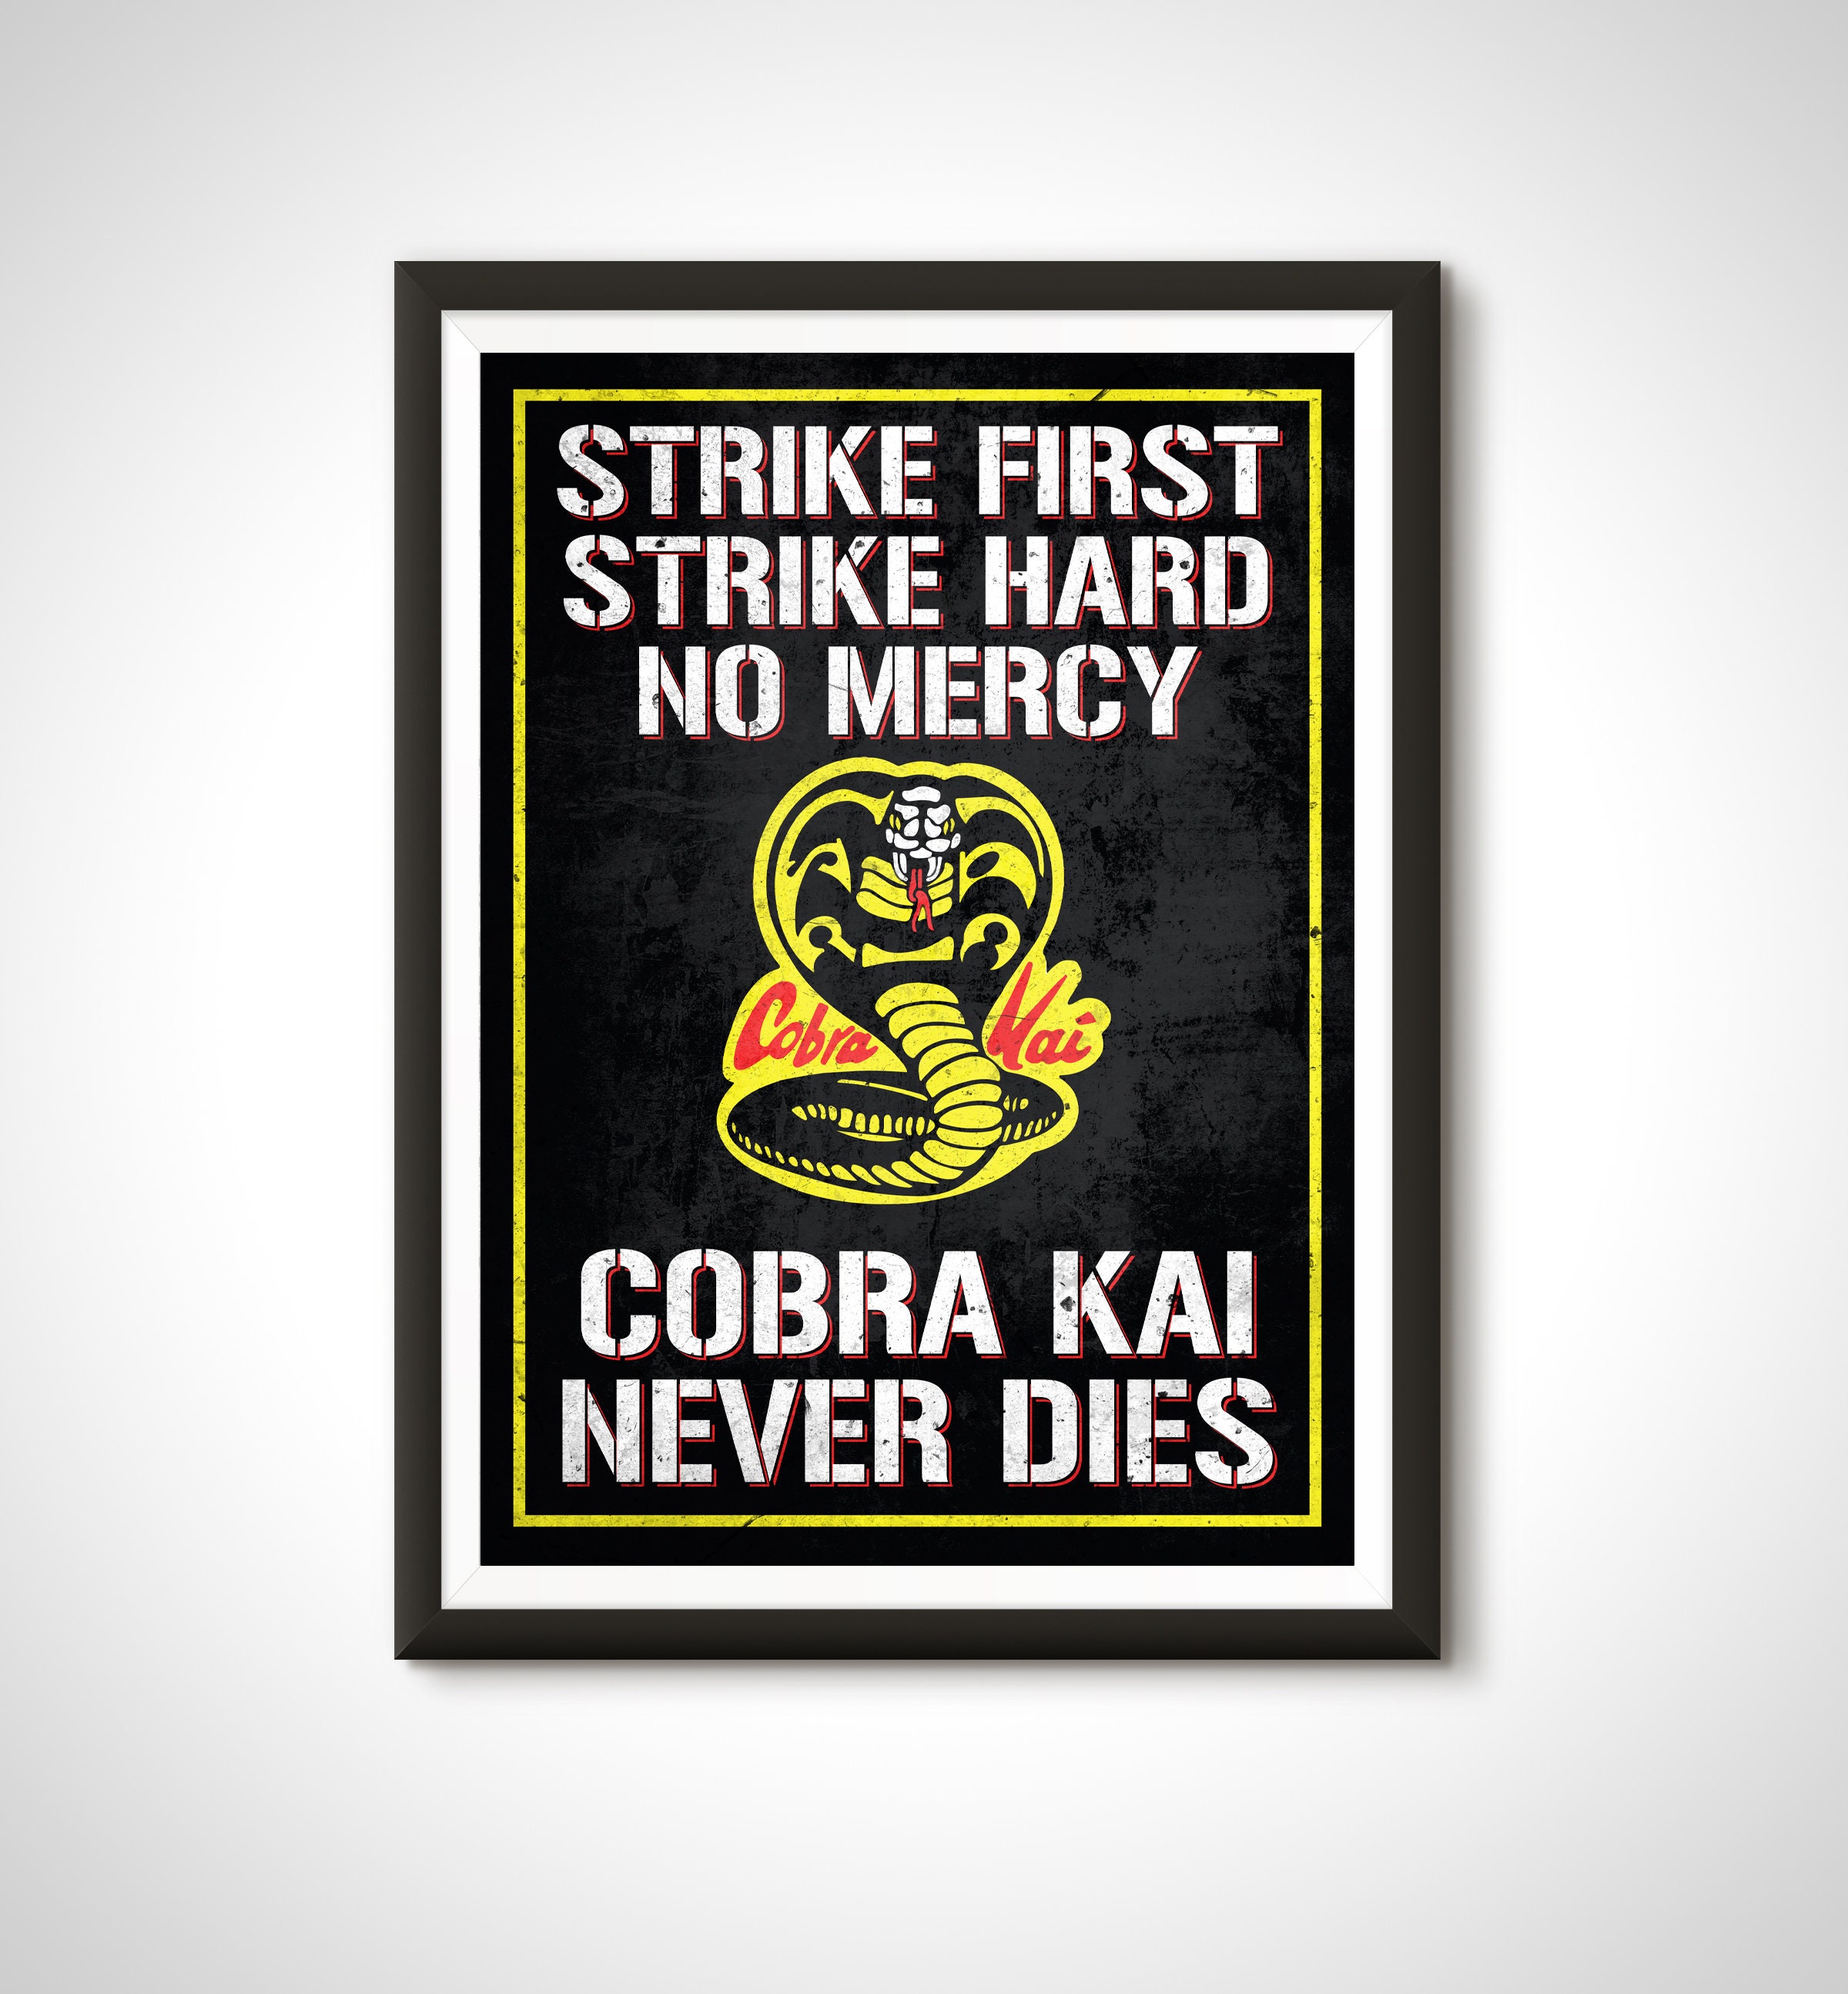  POSTER STOP ONLINE Cobra Kai - TV Show Poster (Key-Art - Sunset  Showdown - Battle) (Size: 24 x 36): Posters & Prints